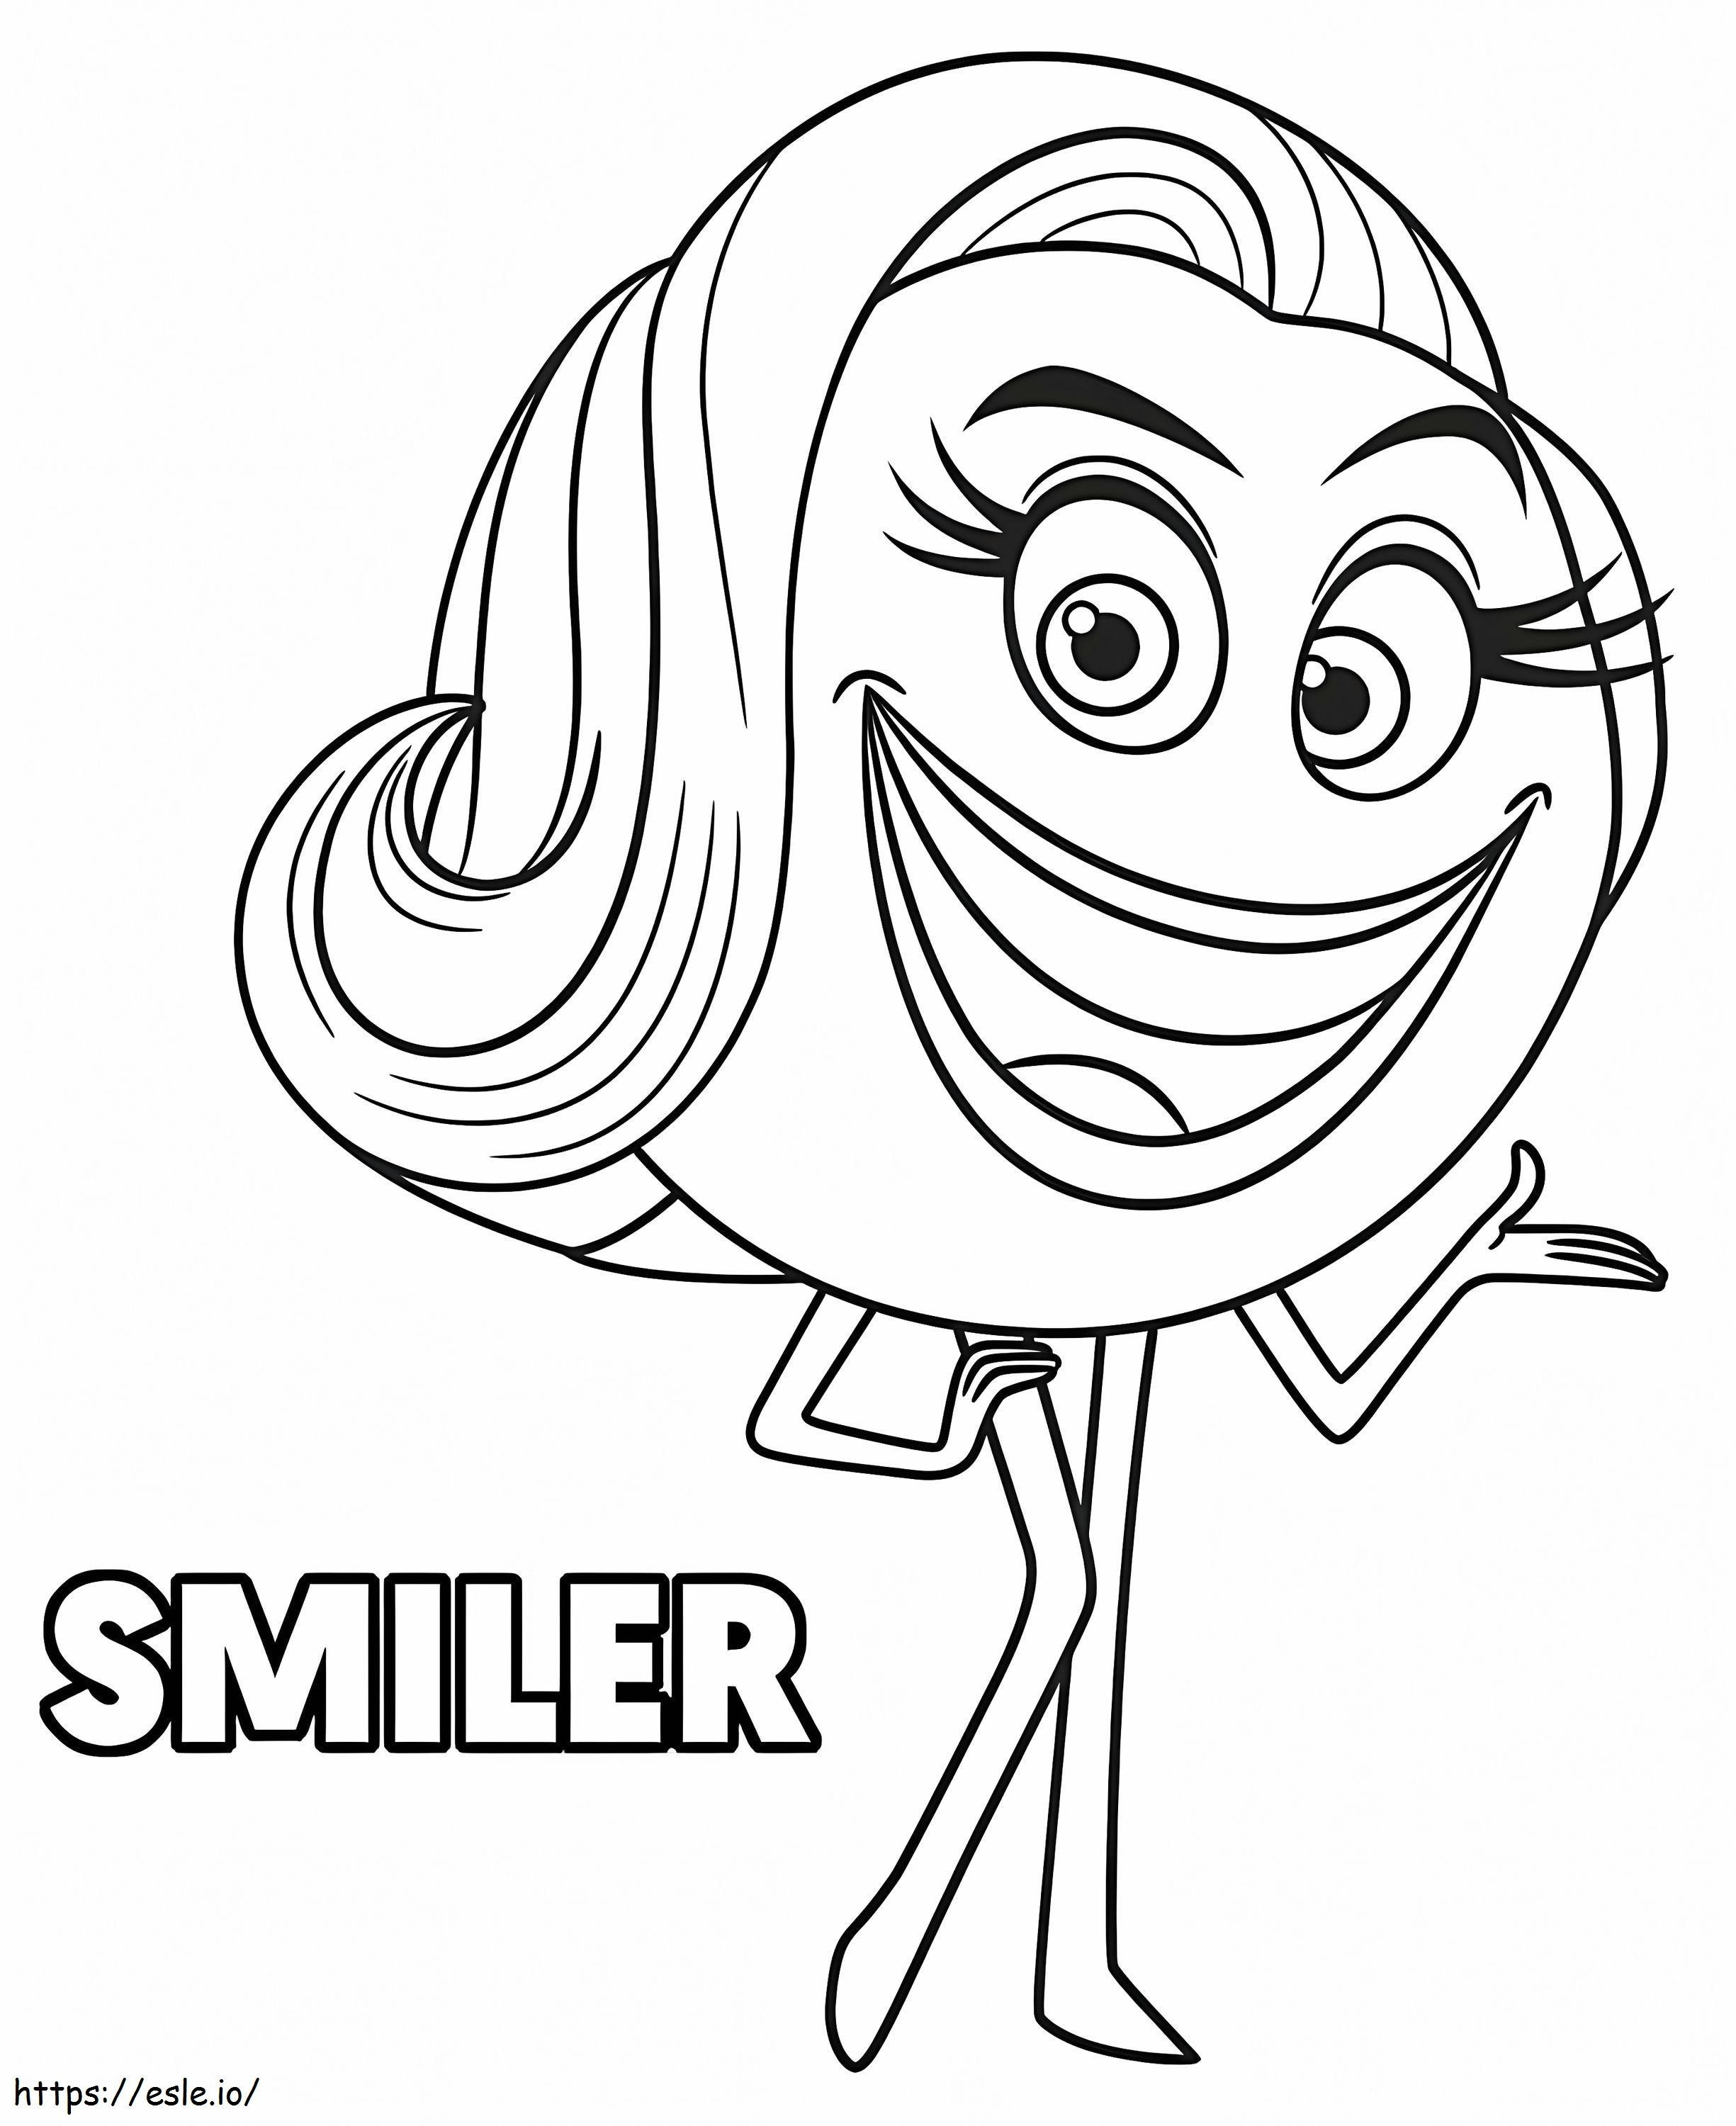 Smiler In The Emoji Movie coloring page